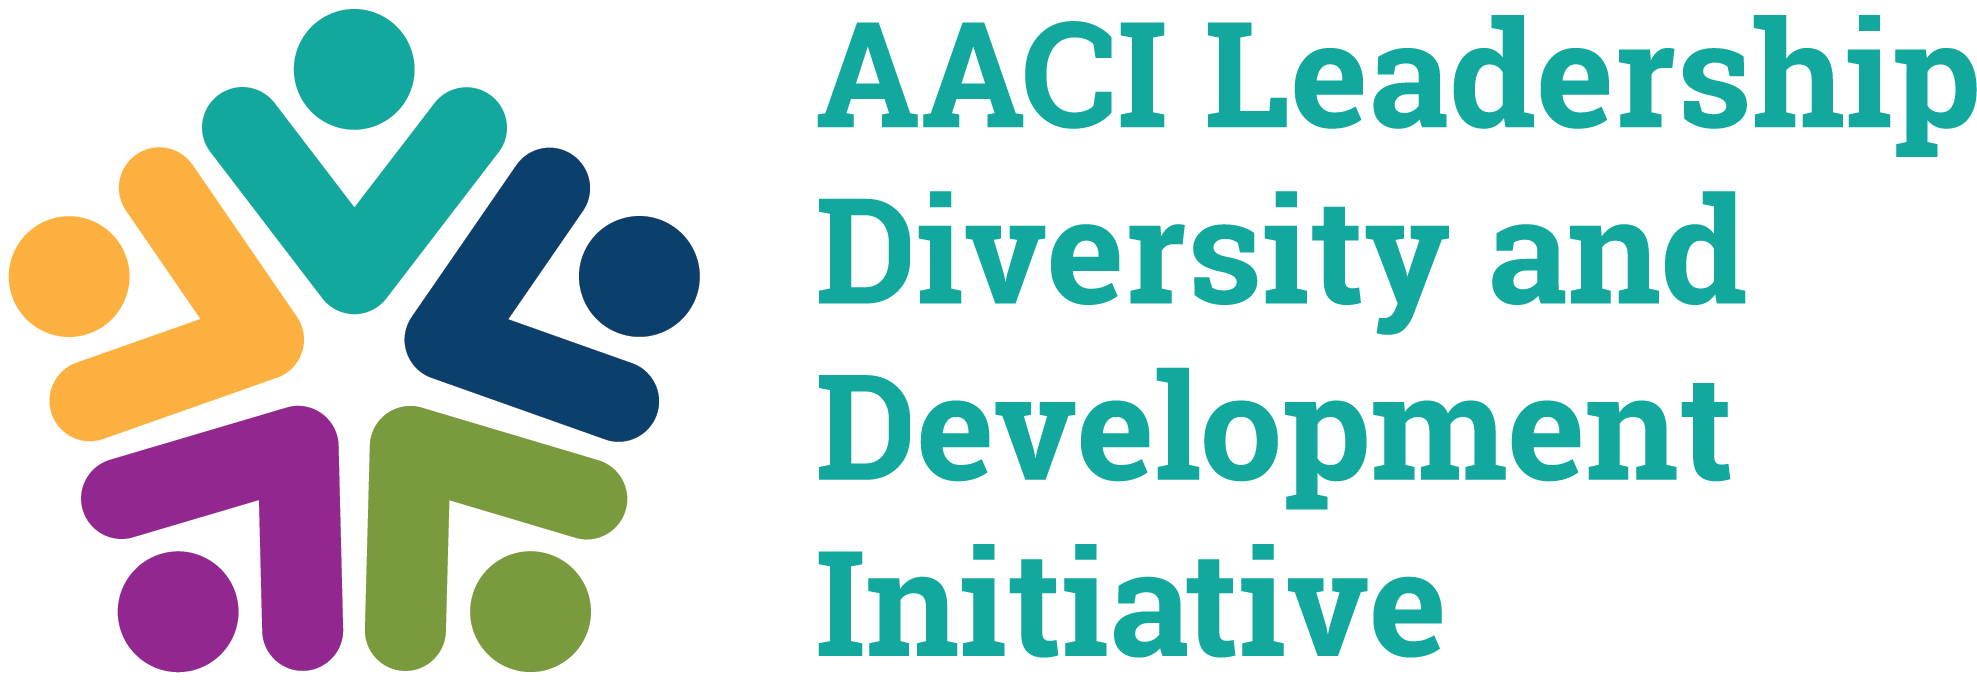 Leadership Diversity and Development Initiative